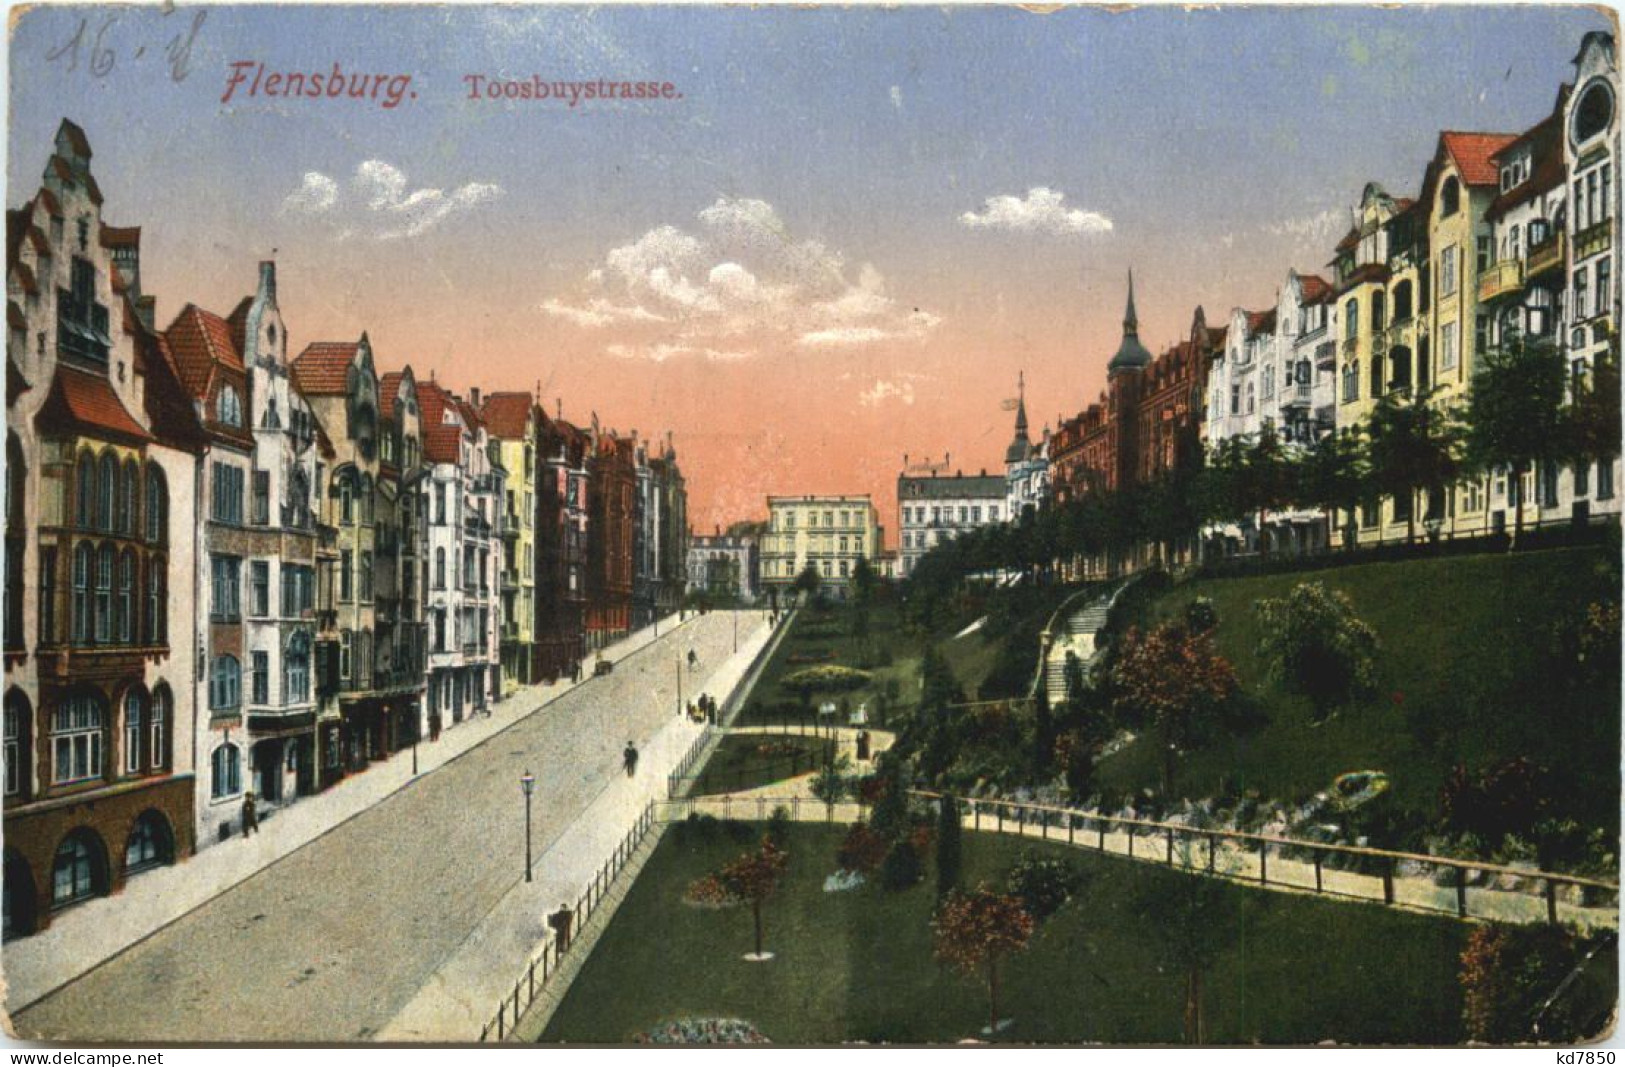 Flensburg - Toosbuystrasse - Flensburg